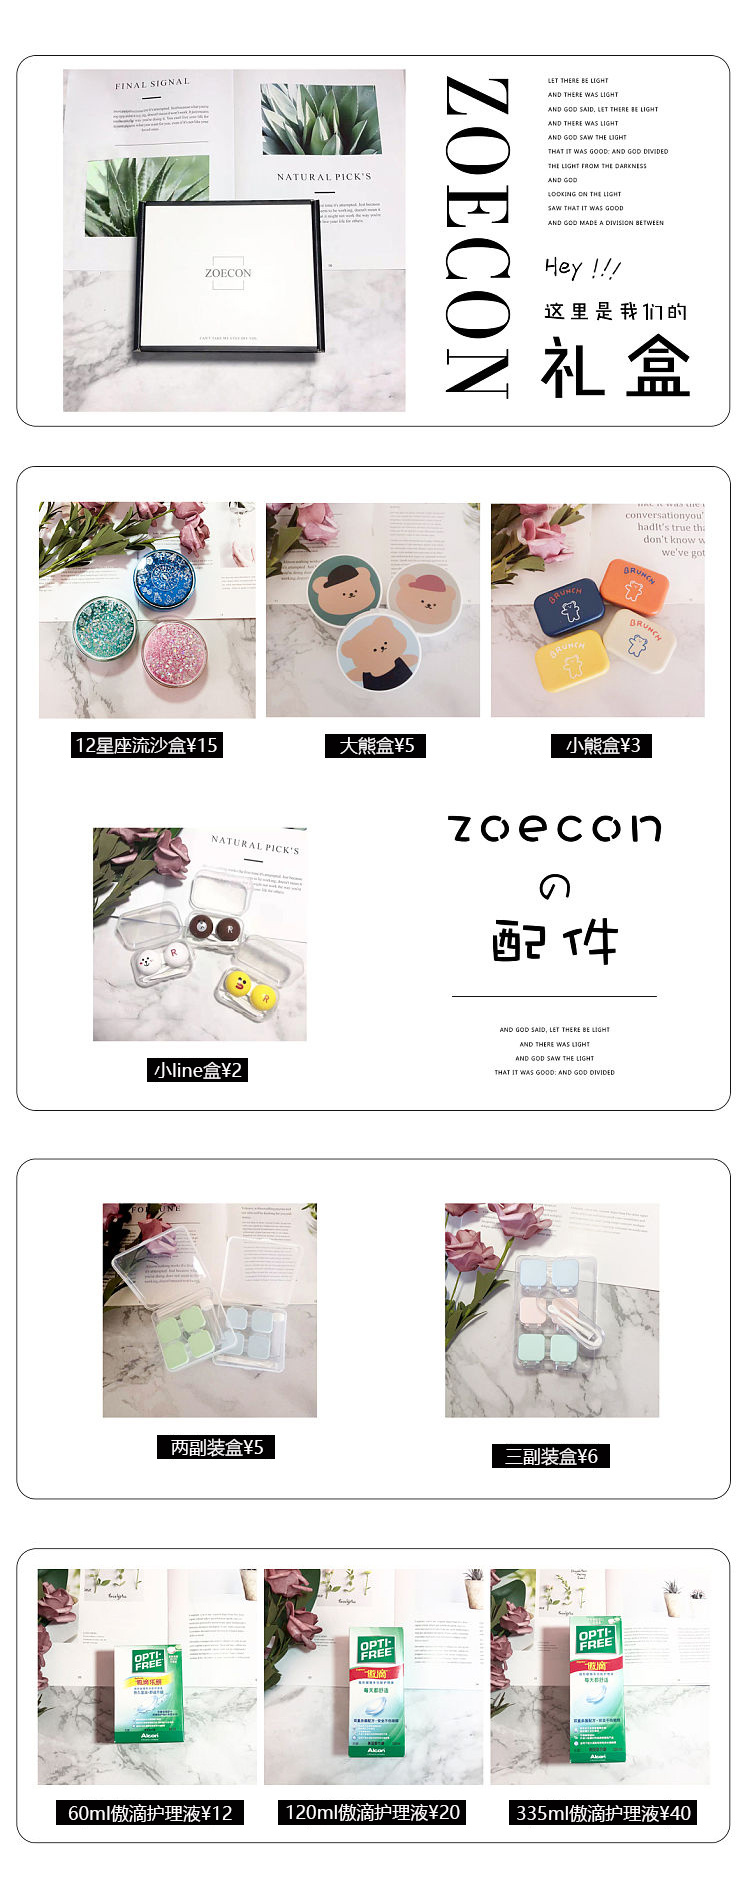 ZOECON 双旦节庆❶+❶超值抢购 - VVCON美瞳网